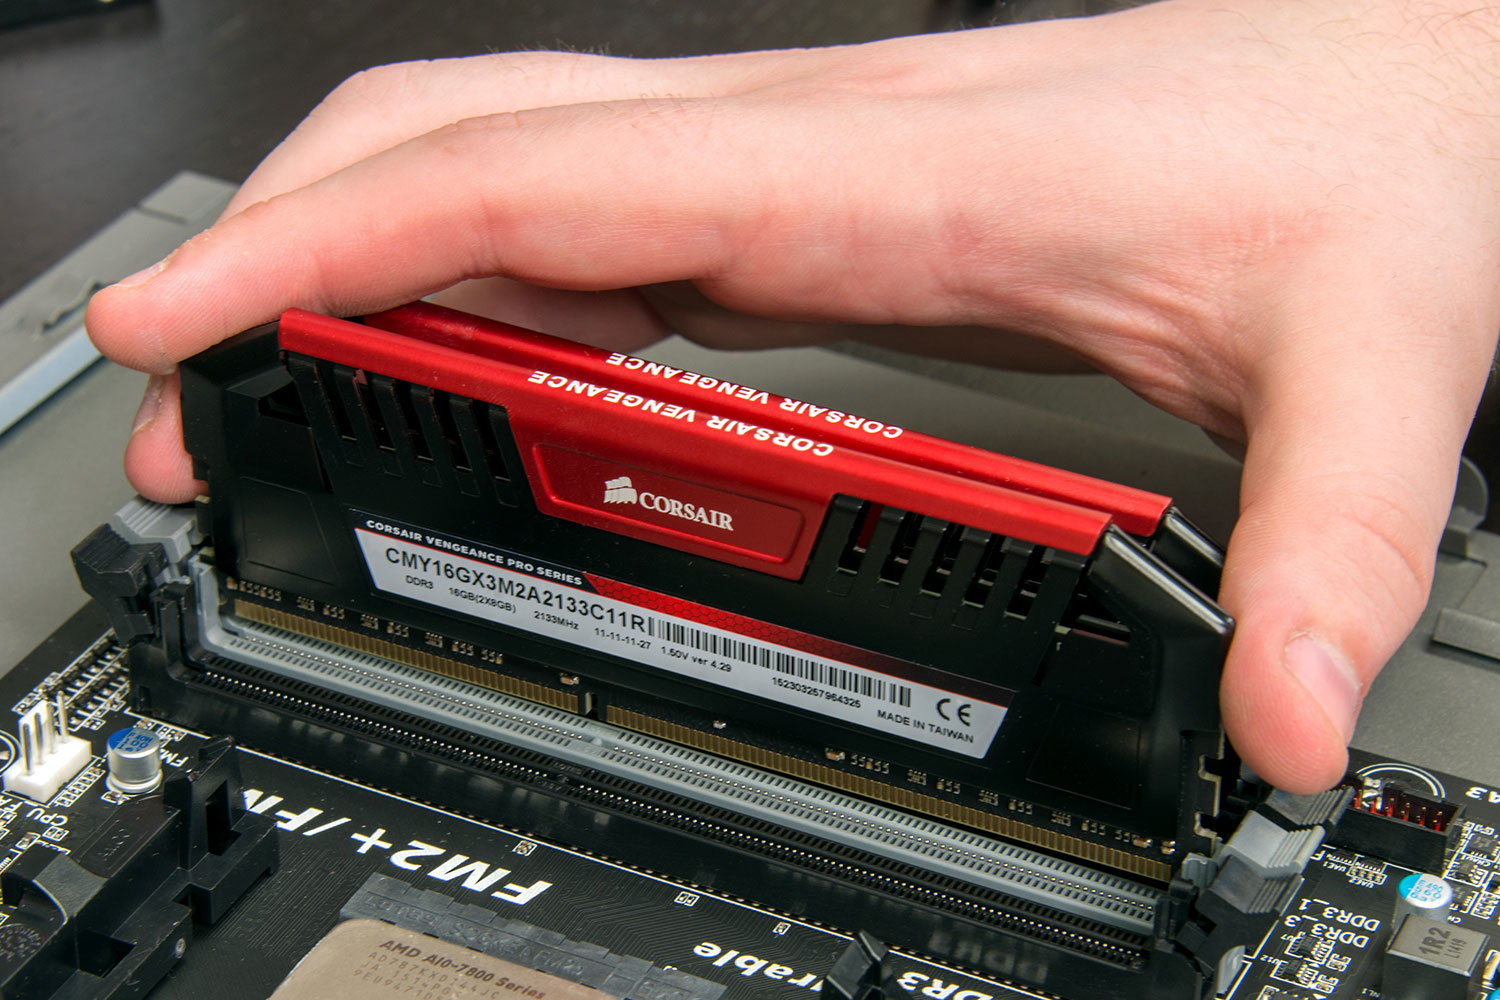 RAM in motherboard slots.